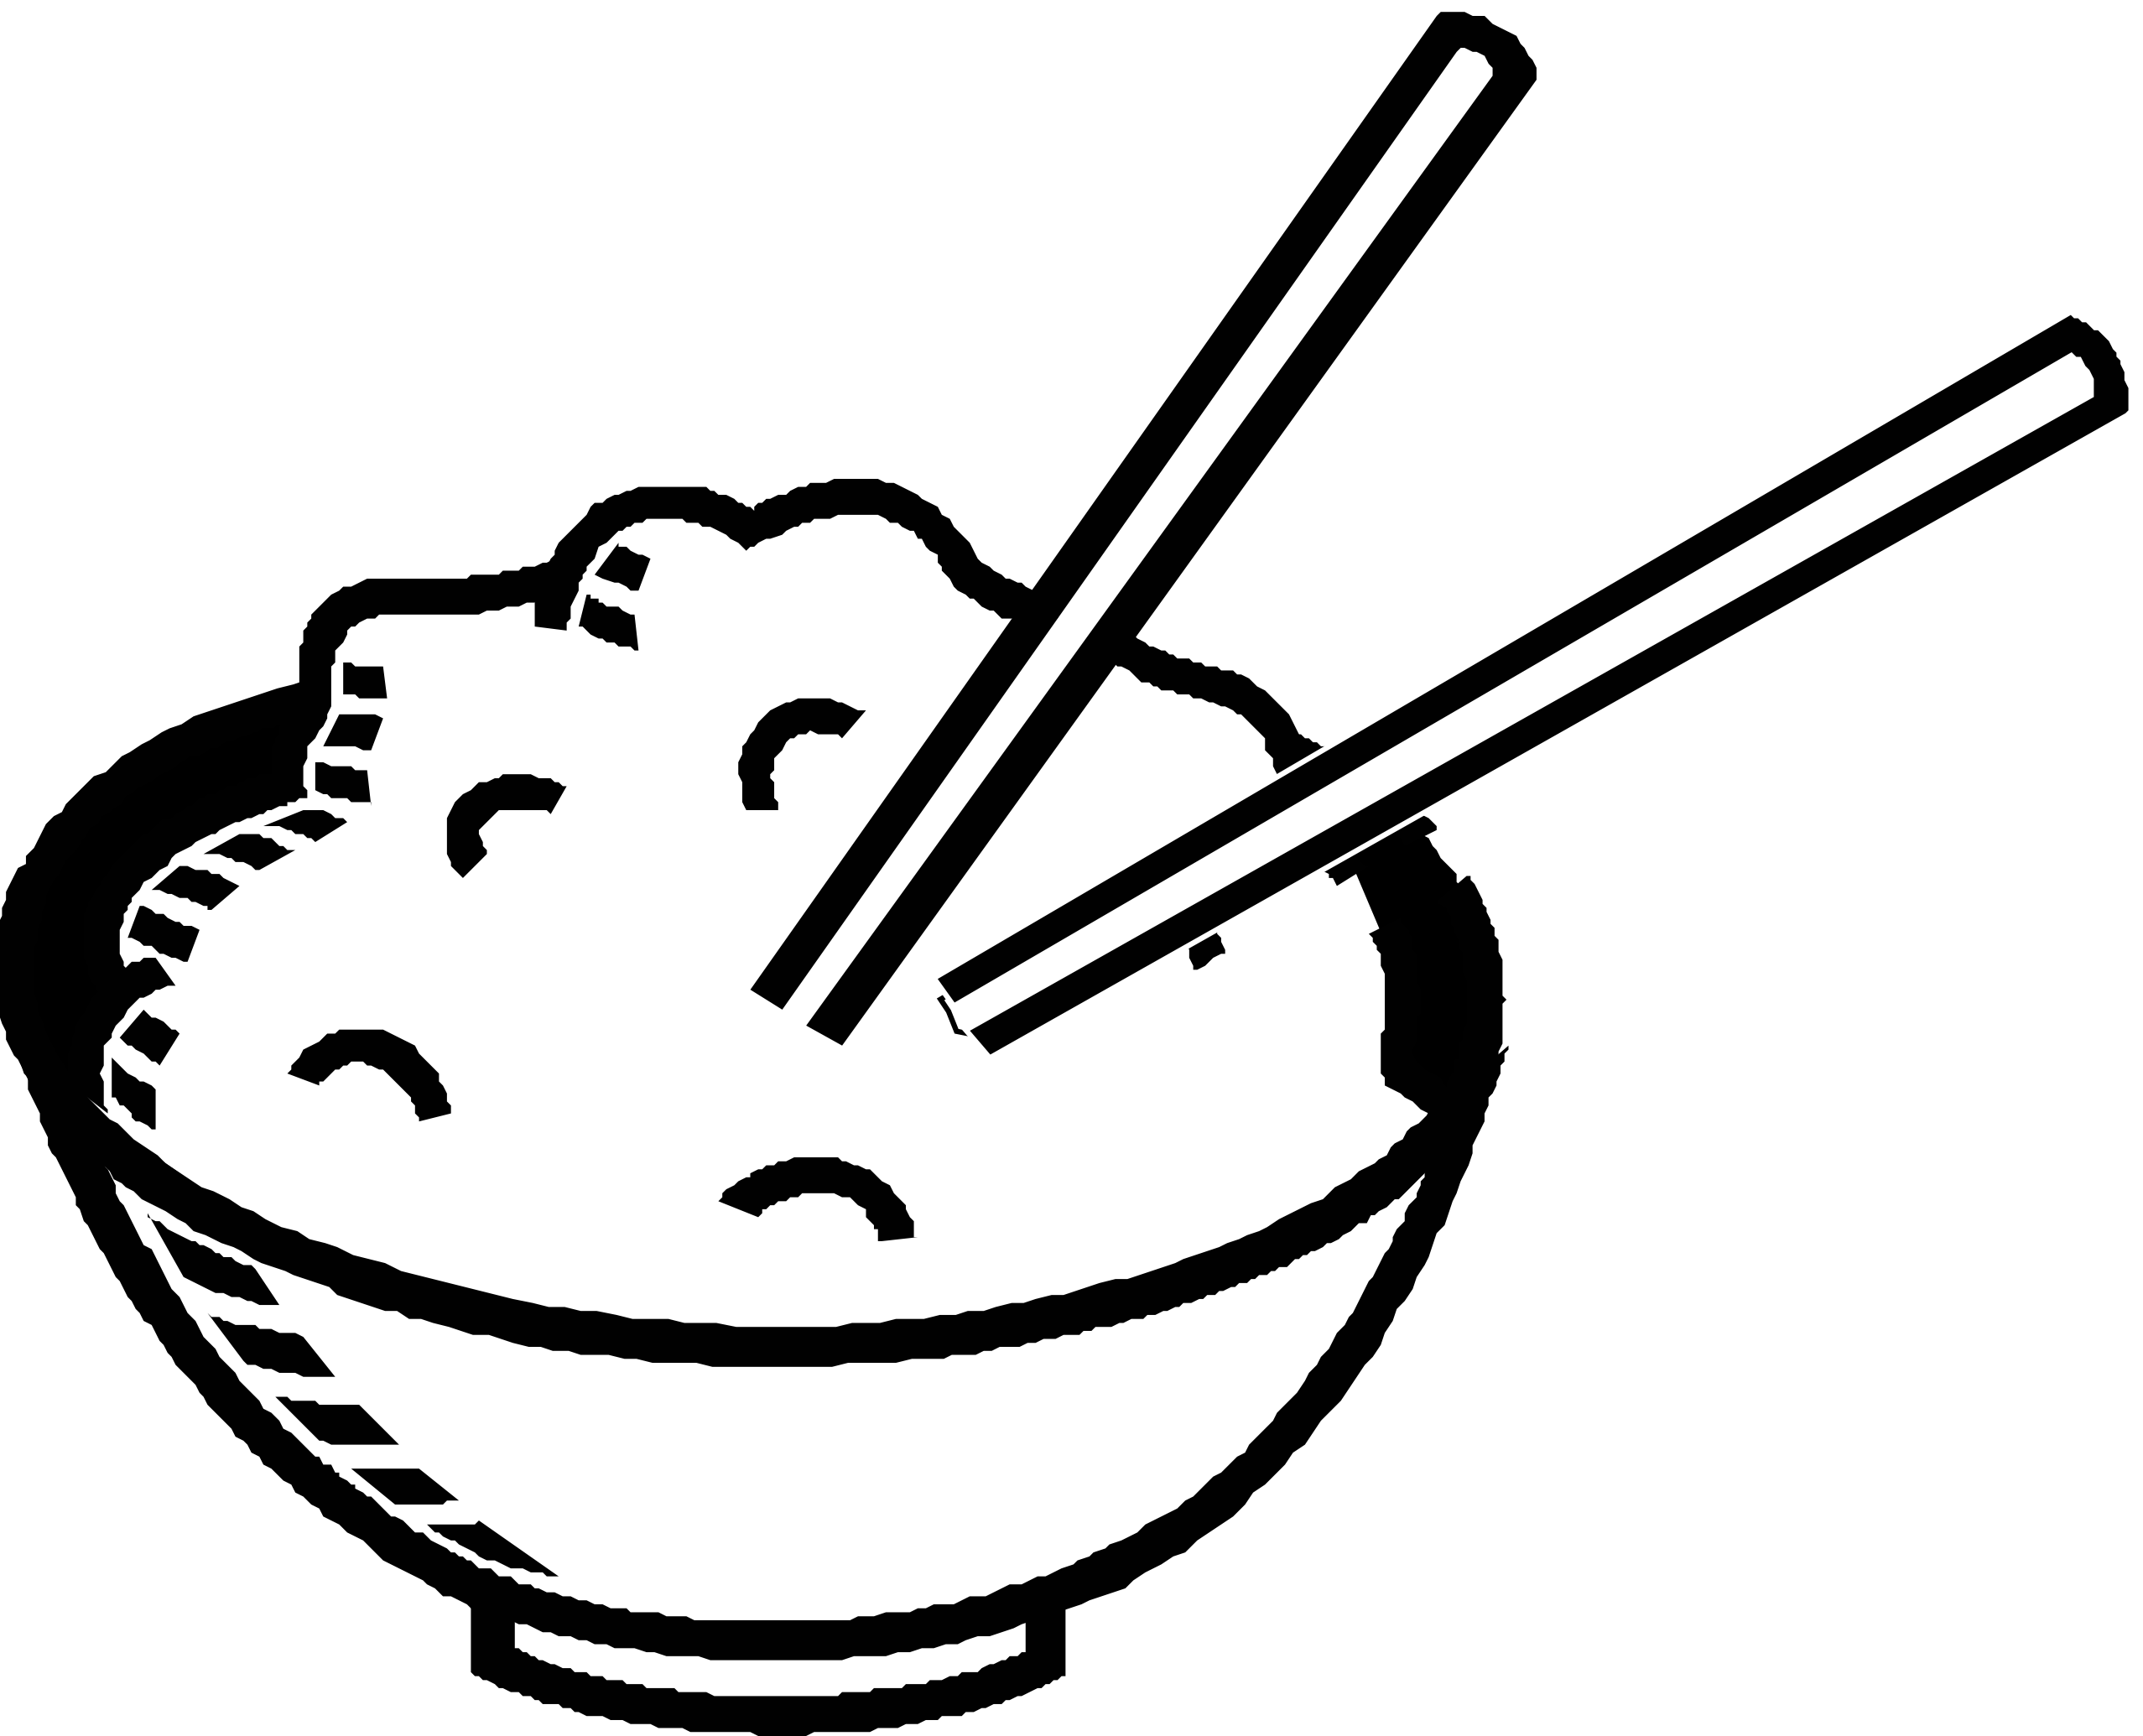 White rice clipart